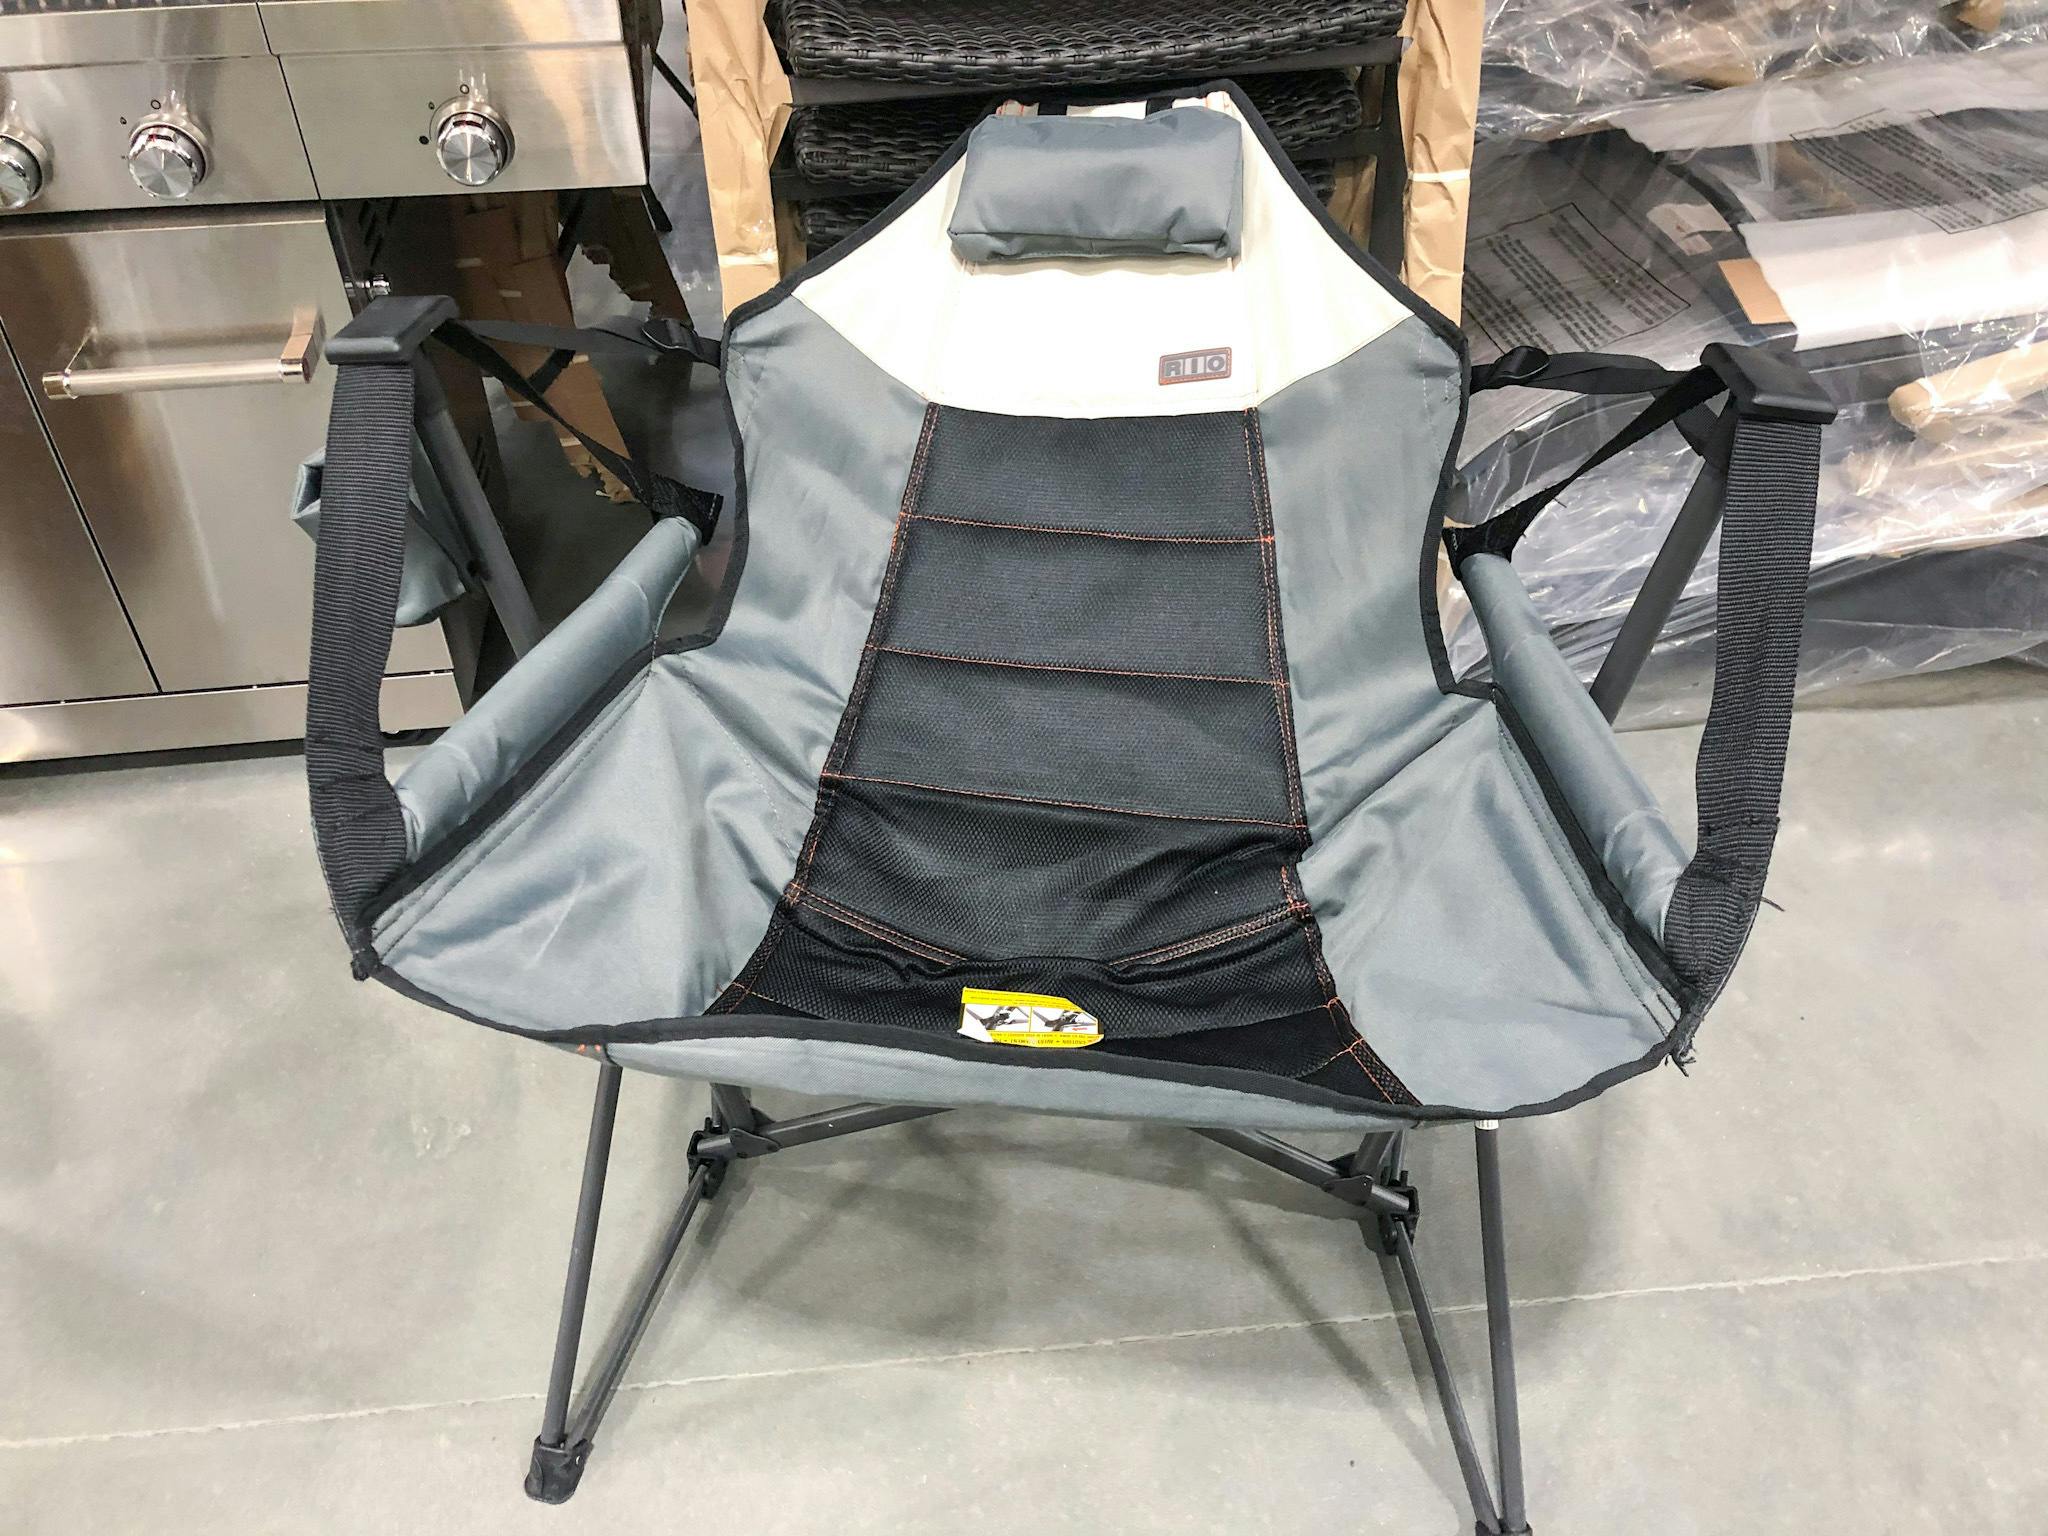 Folding Hammock Chair Costco - bmp-place